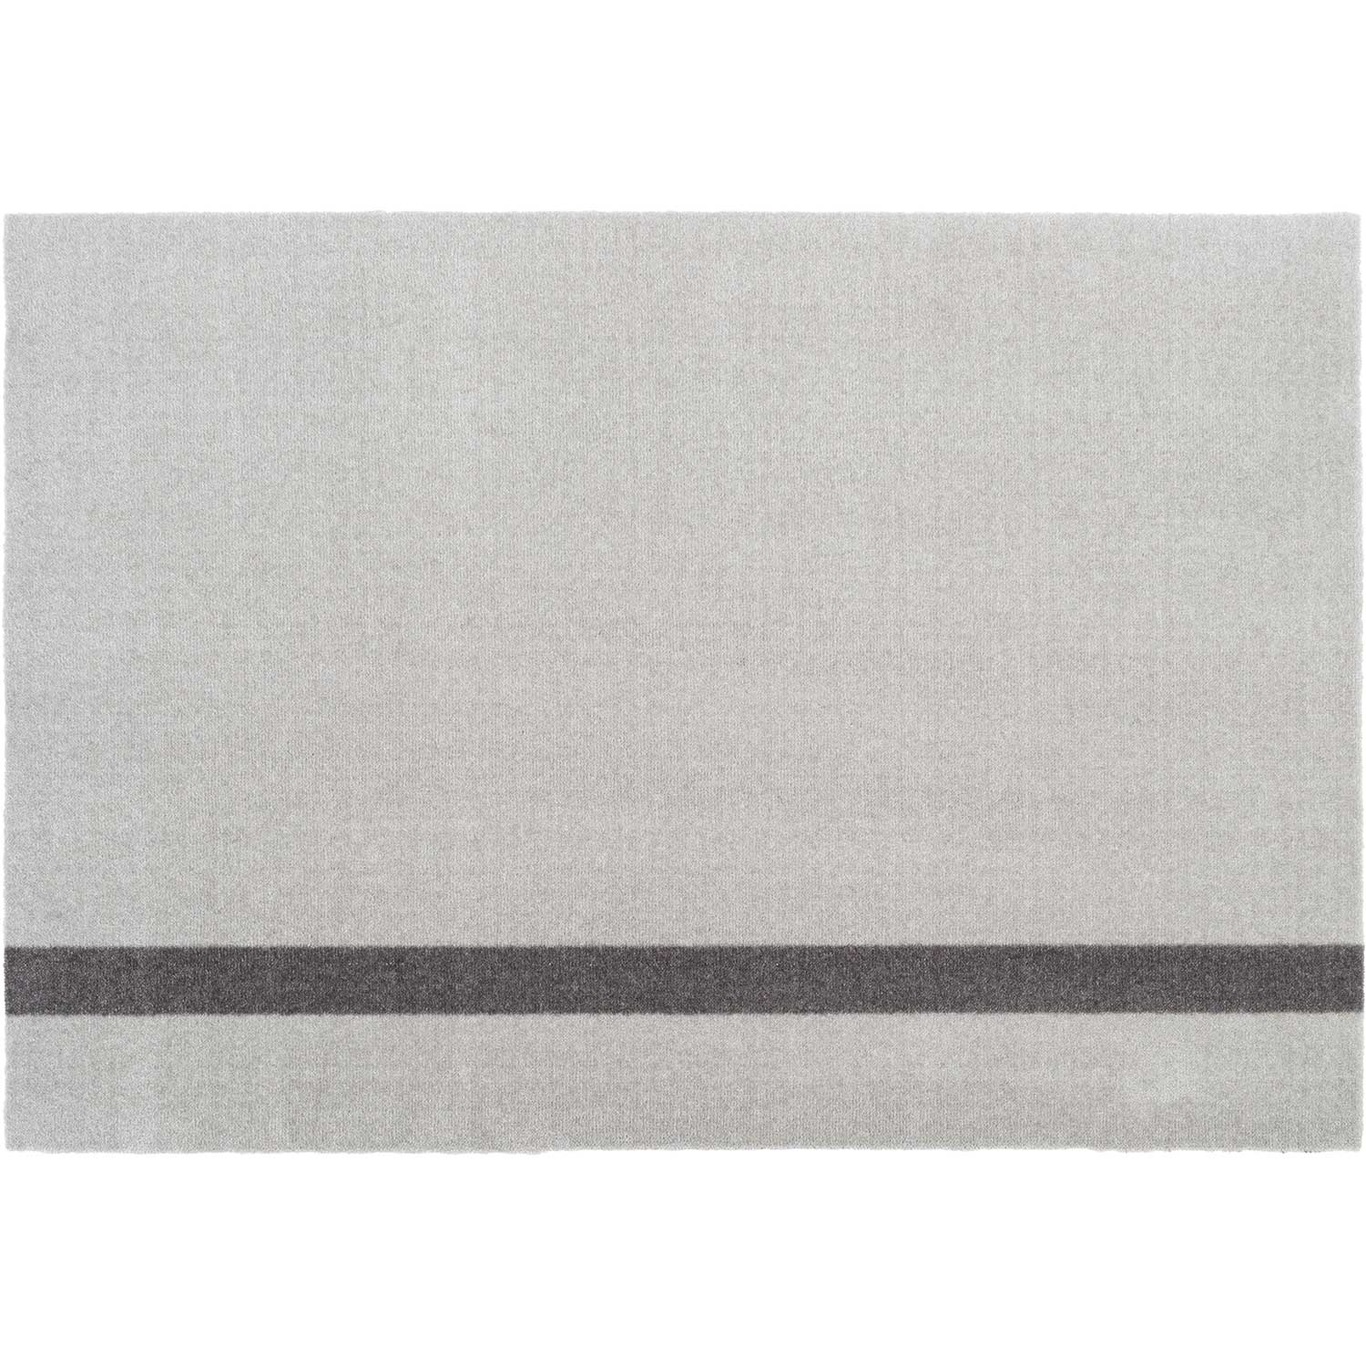 Stripes Vertikal Matto Vaaleanharmaa / Steel Grey, 90x130 cm